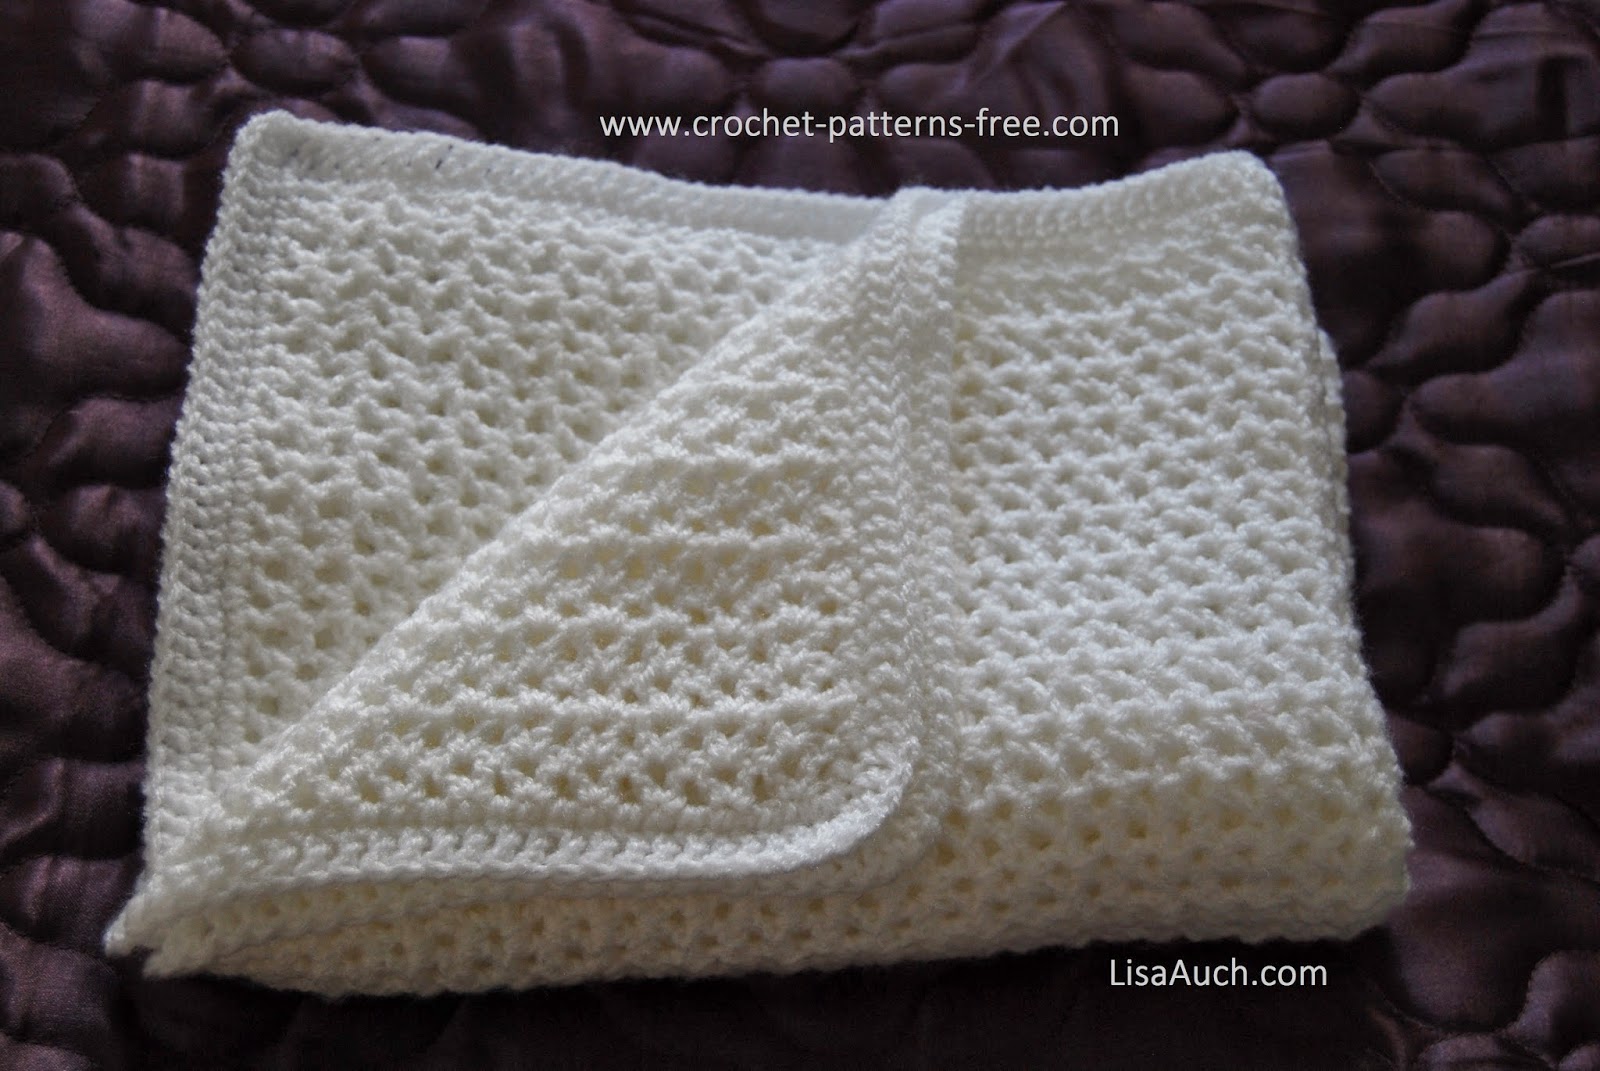 free crochet patterns-baby blanket patterns-baby afghan patterns-crochet patterns free 